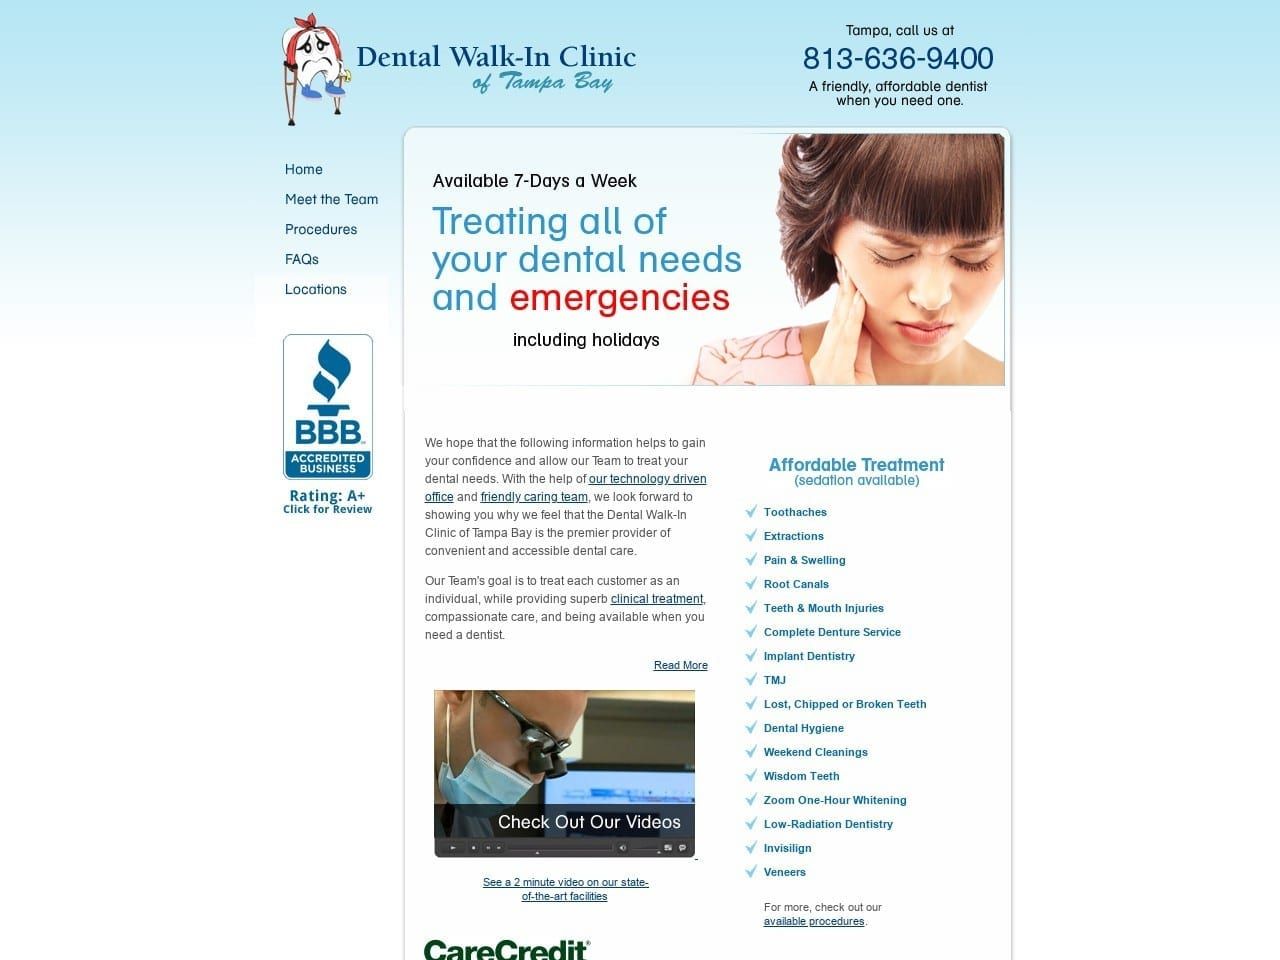 Dental Walk Website Screenshot from dentalwalkin.com